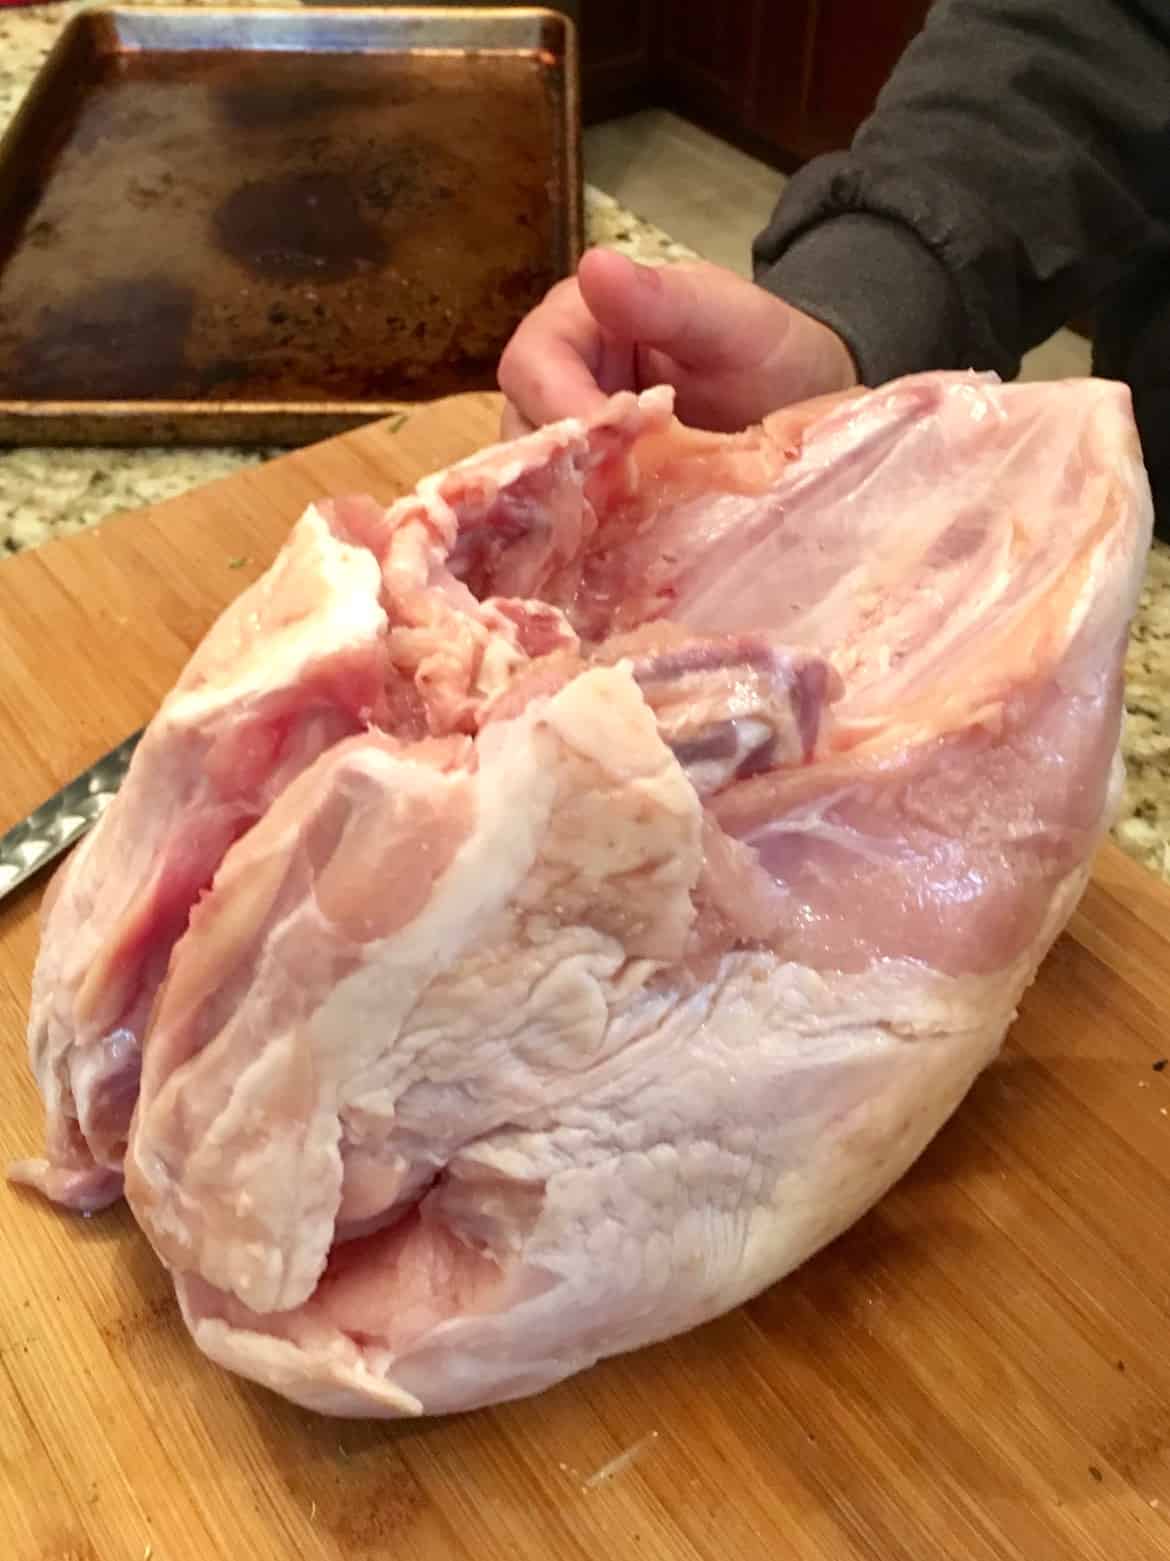 Raw turkey on wooden cutting board ready to be deboned